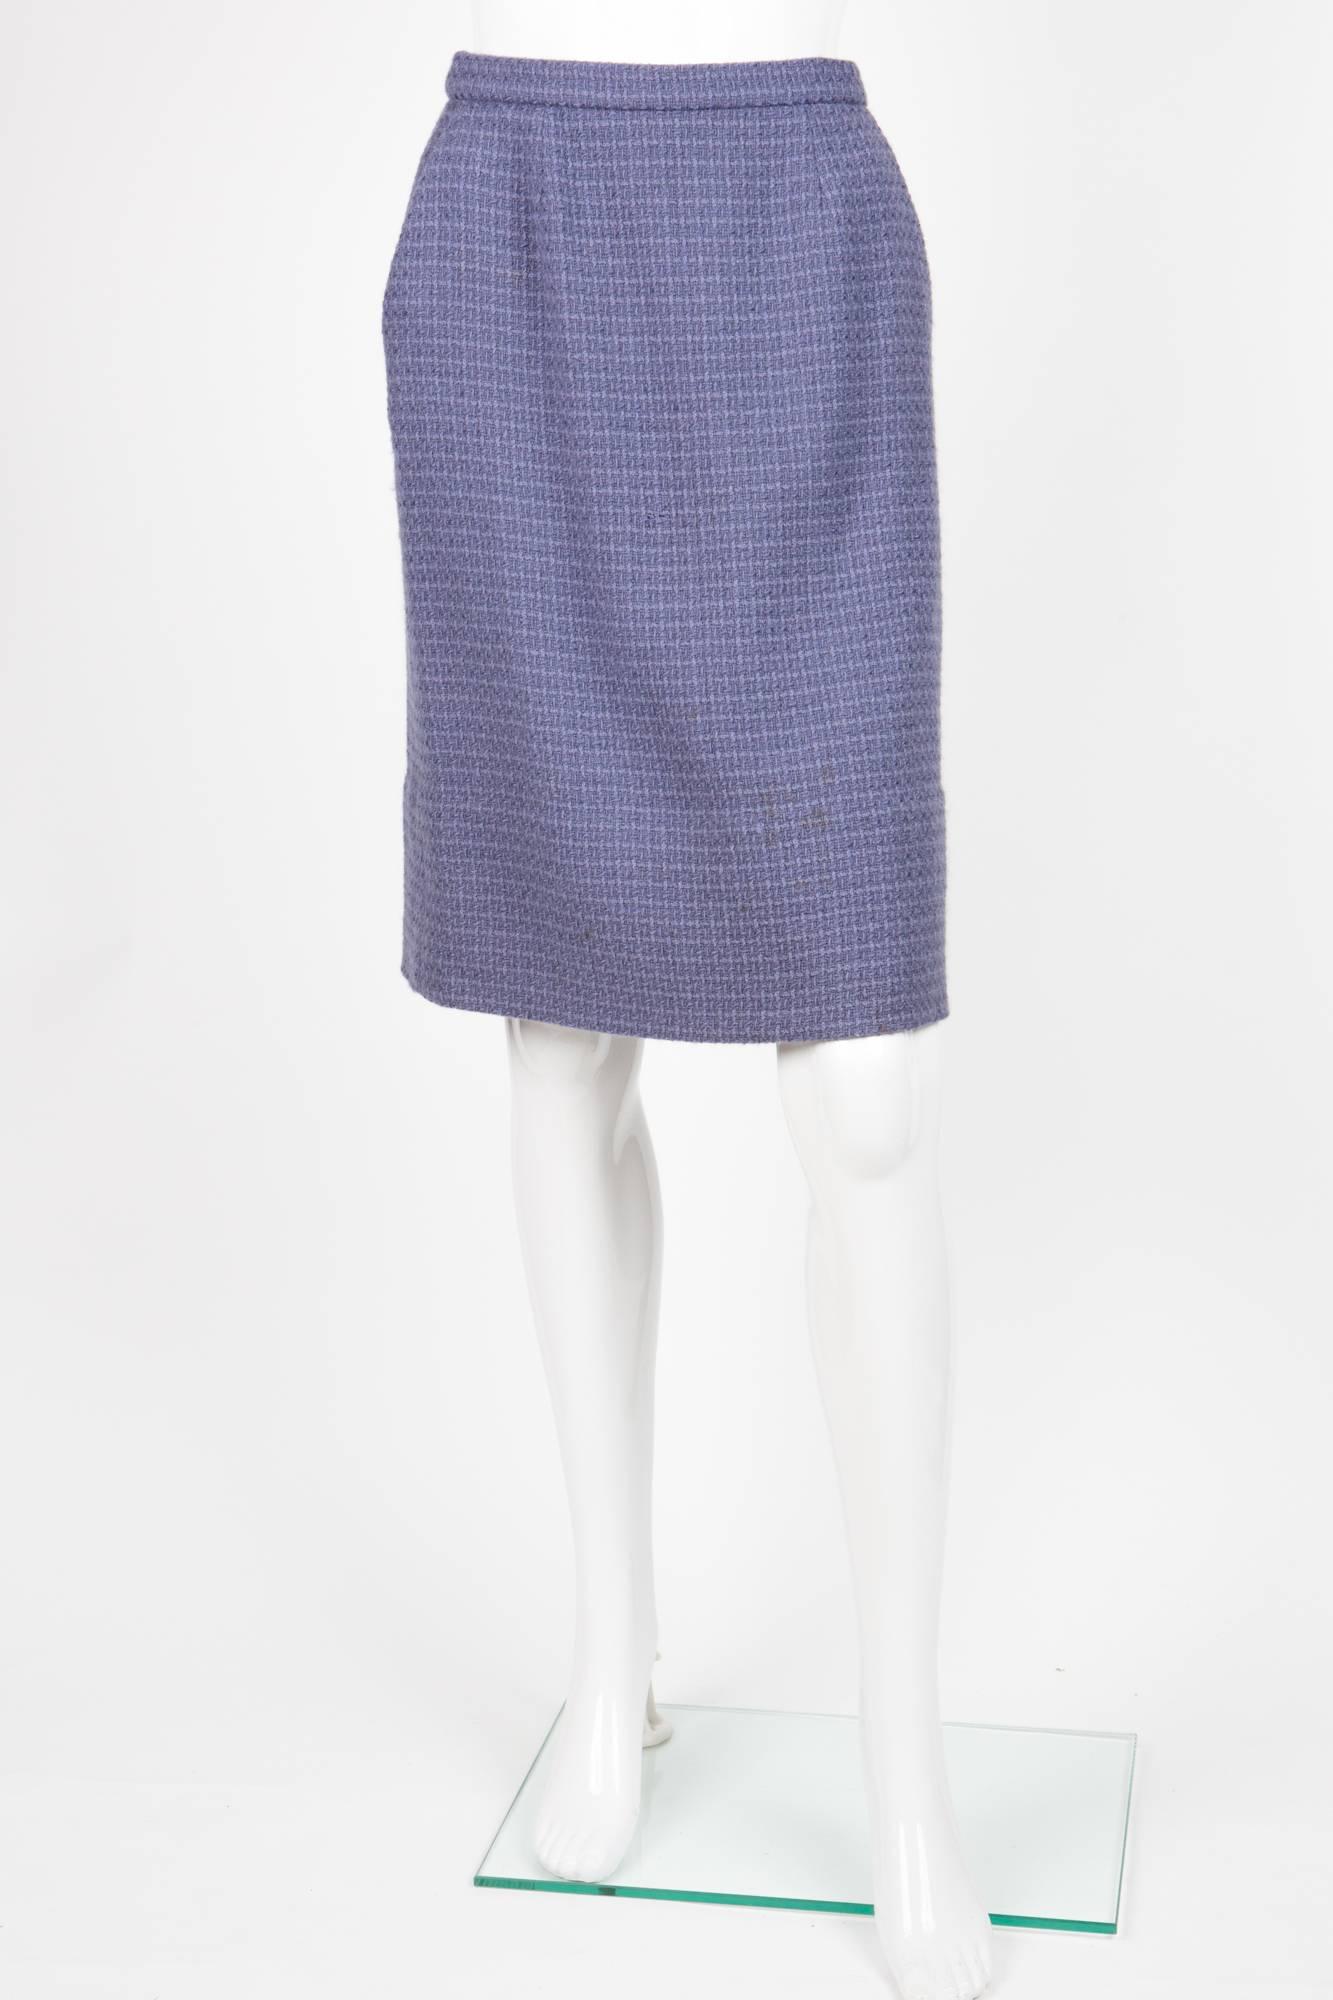 1970s Iconic Parme Boucle Chanel Skirt Suit 3